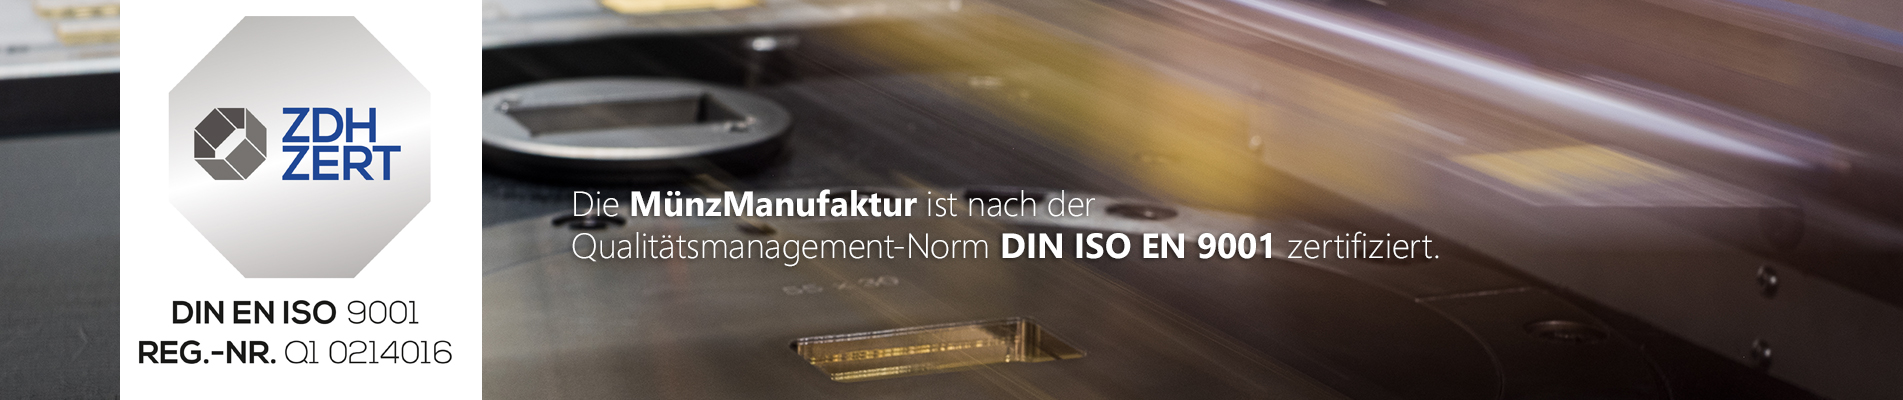 MünzManufaktur Qualitätsmanagement DIN ISO EN 9001